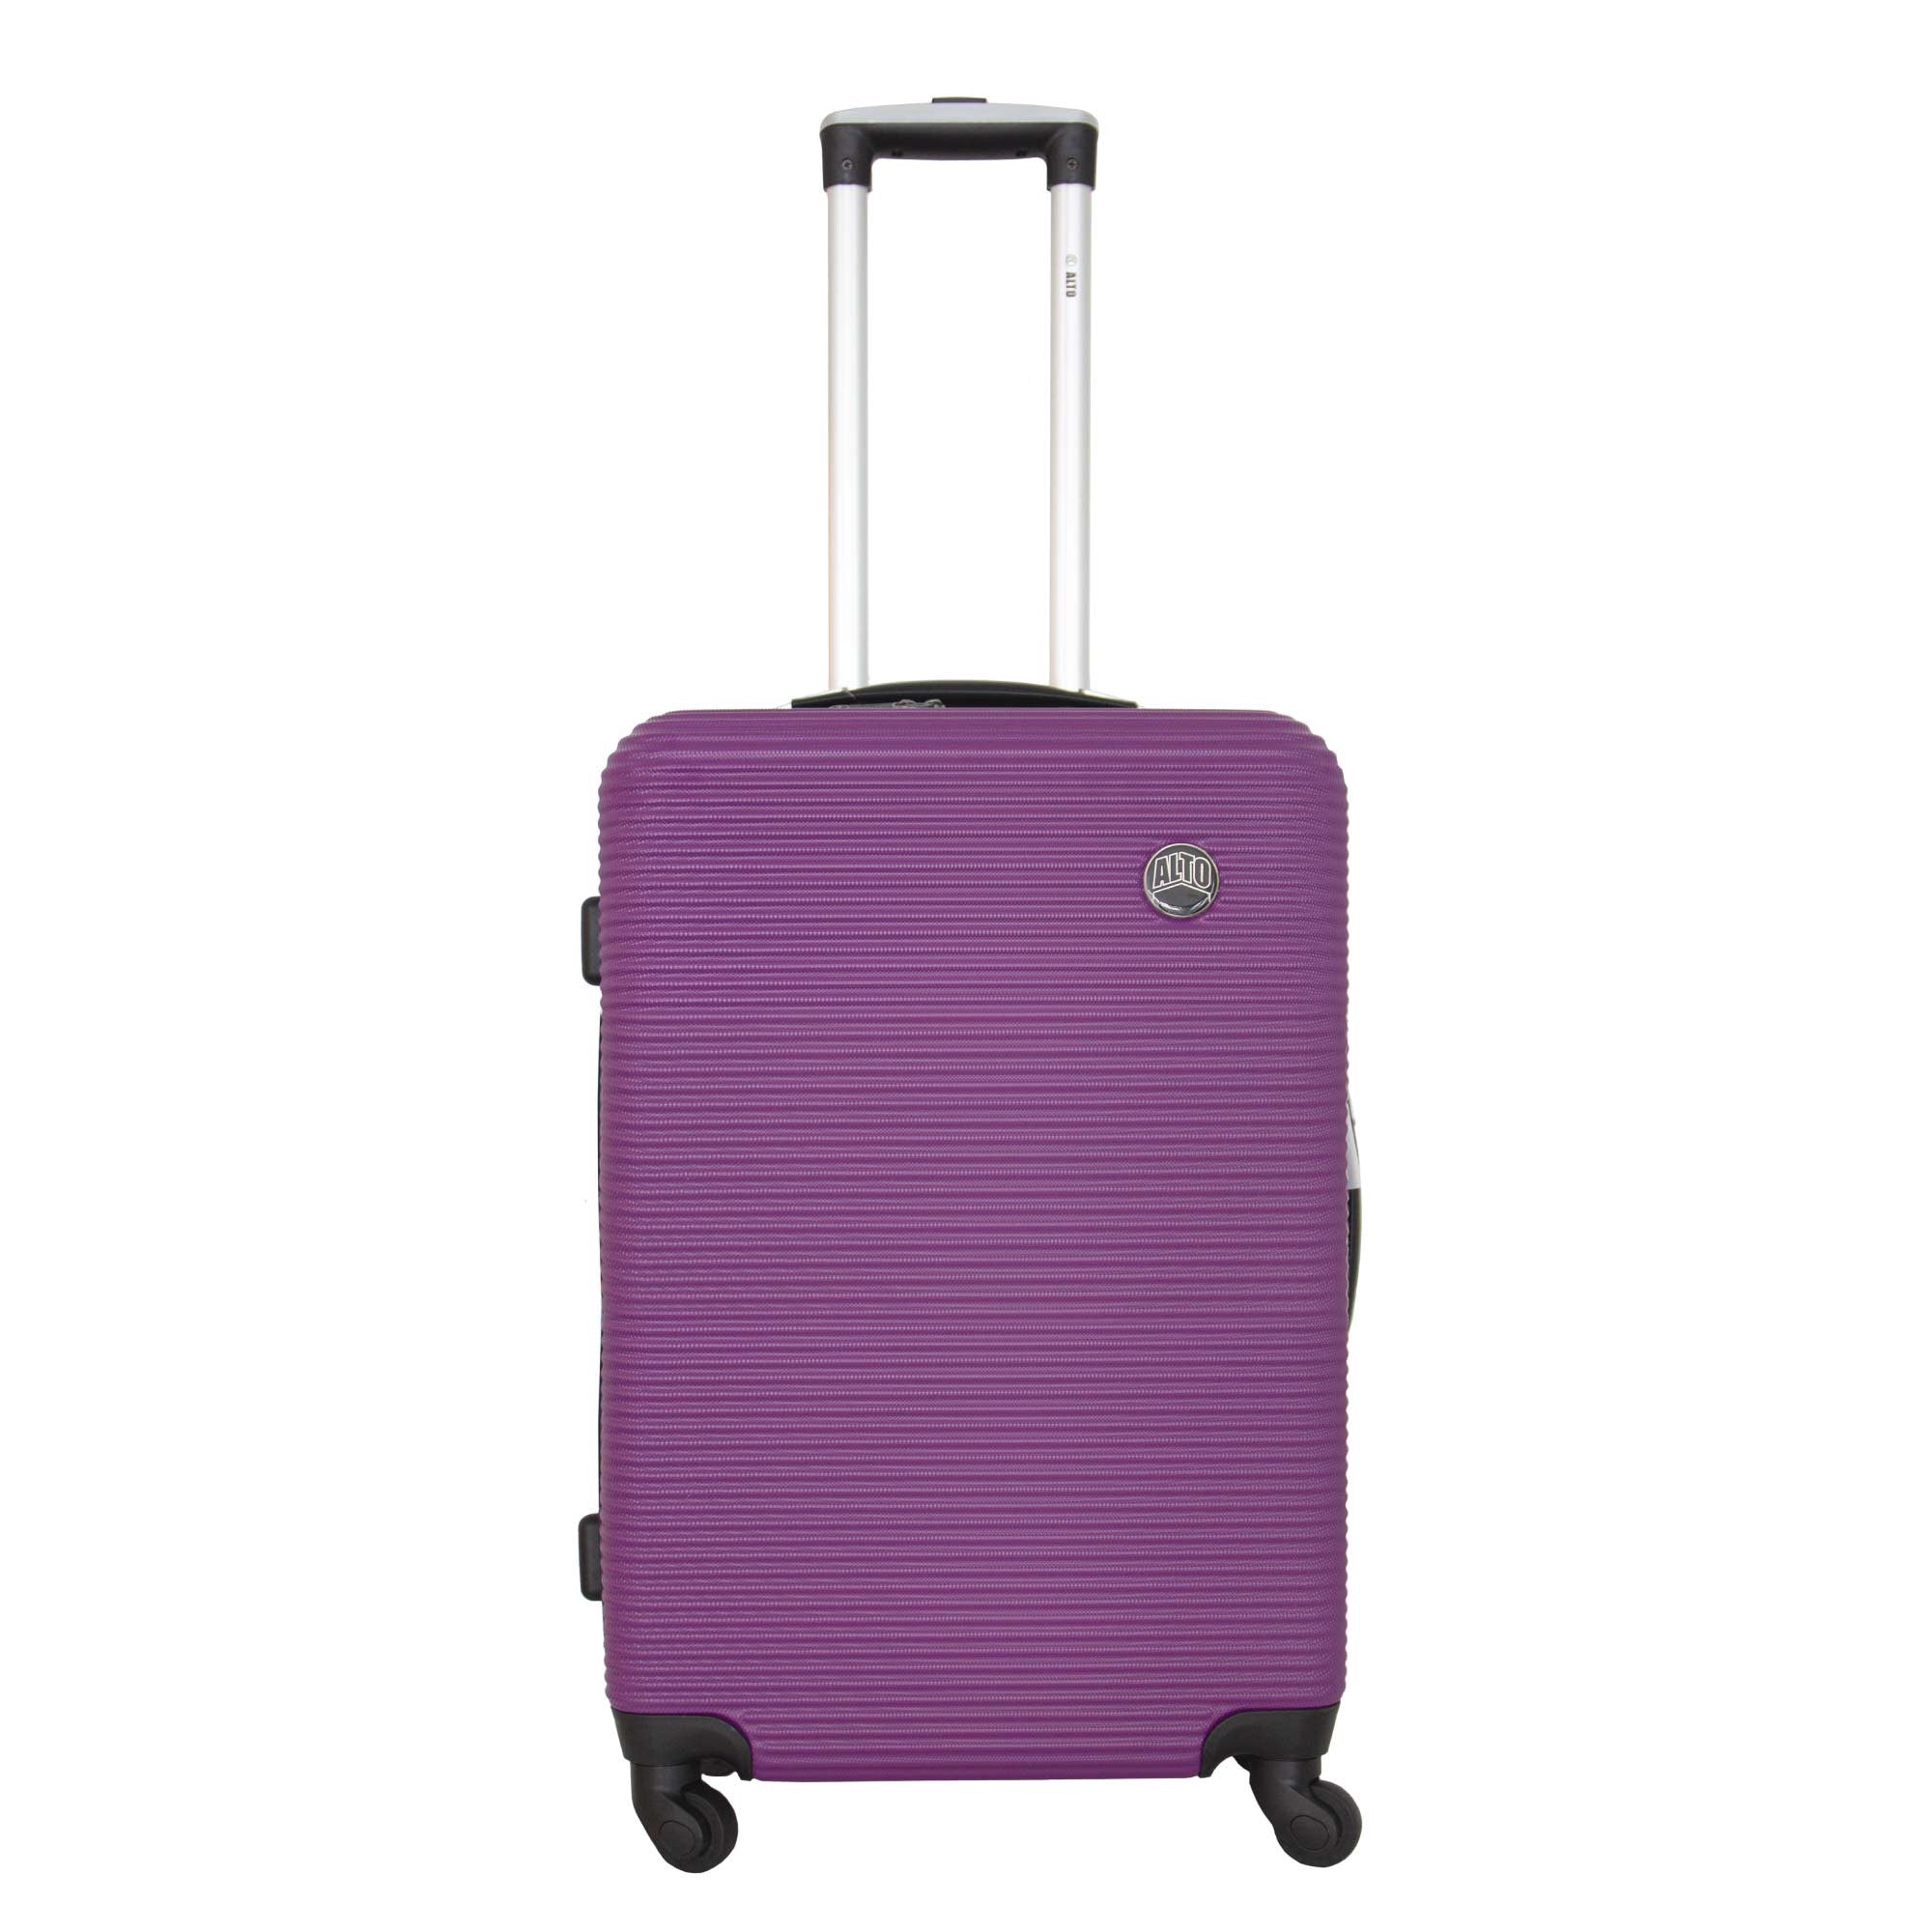 Alto Ultra ABS Luggage Suitcase - Purple - Medium  | TJ Hughes